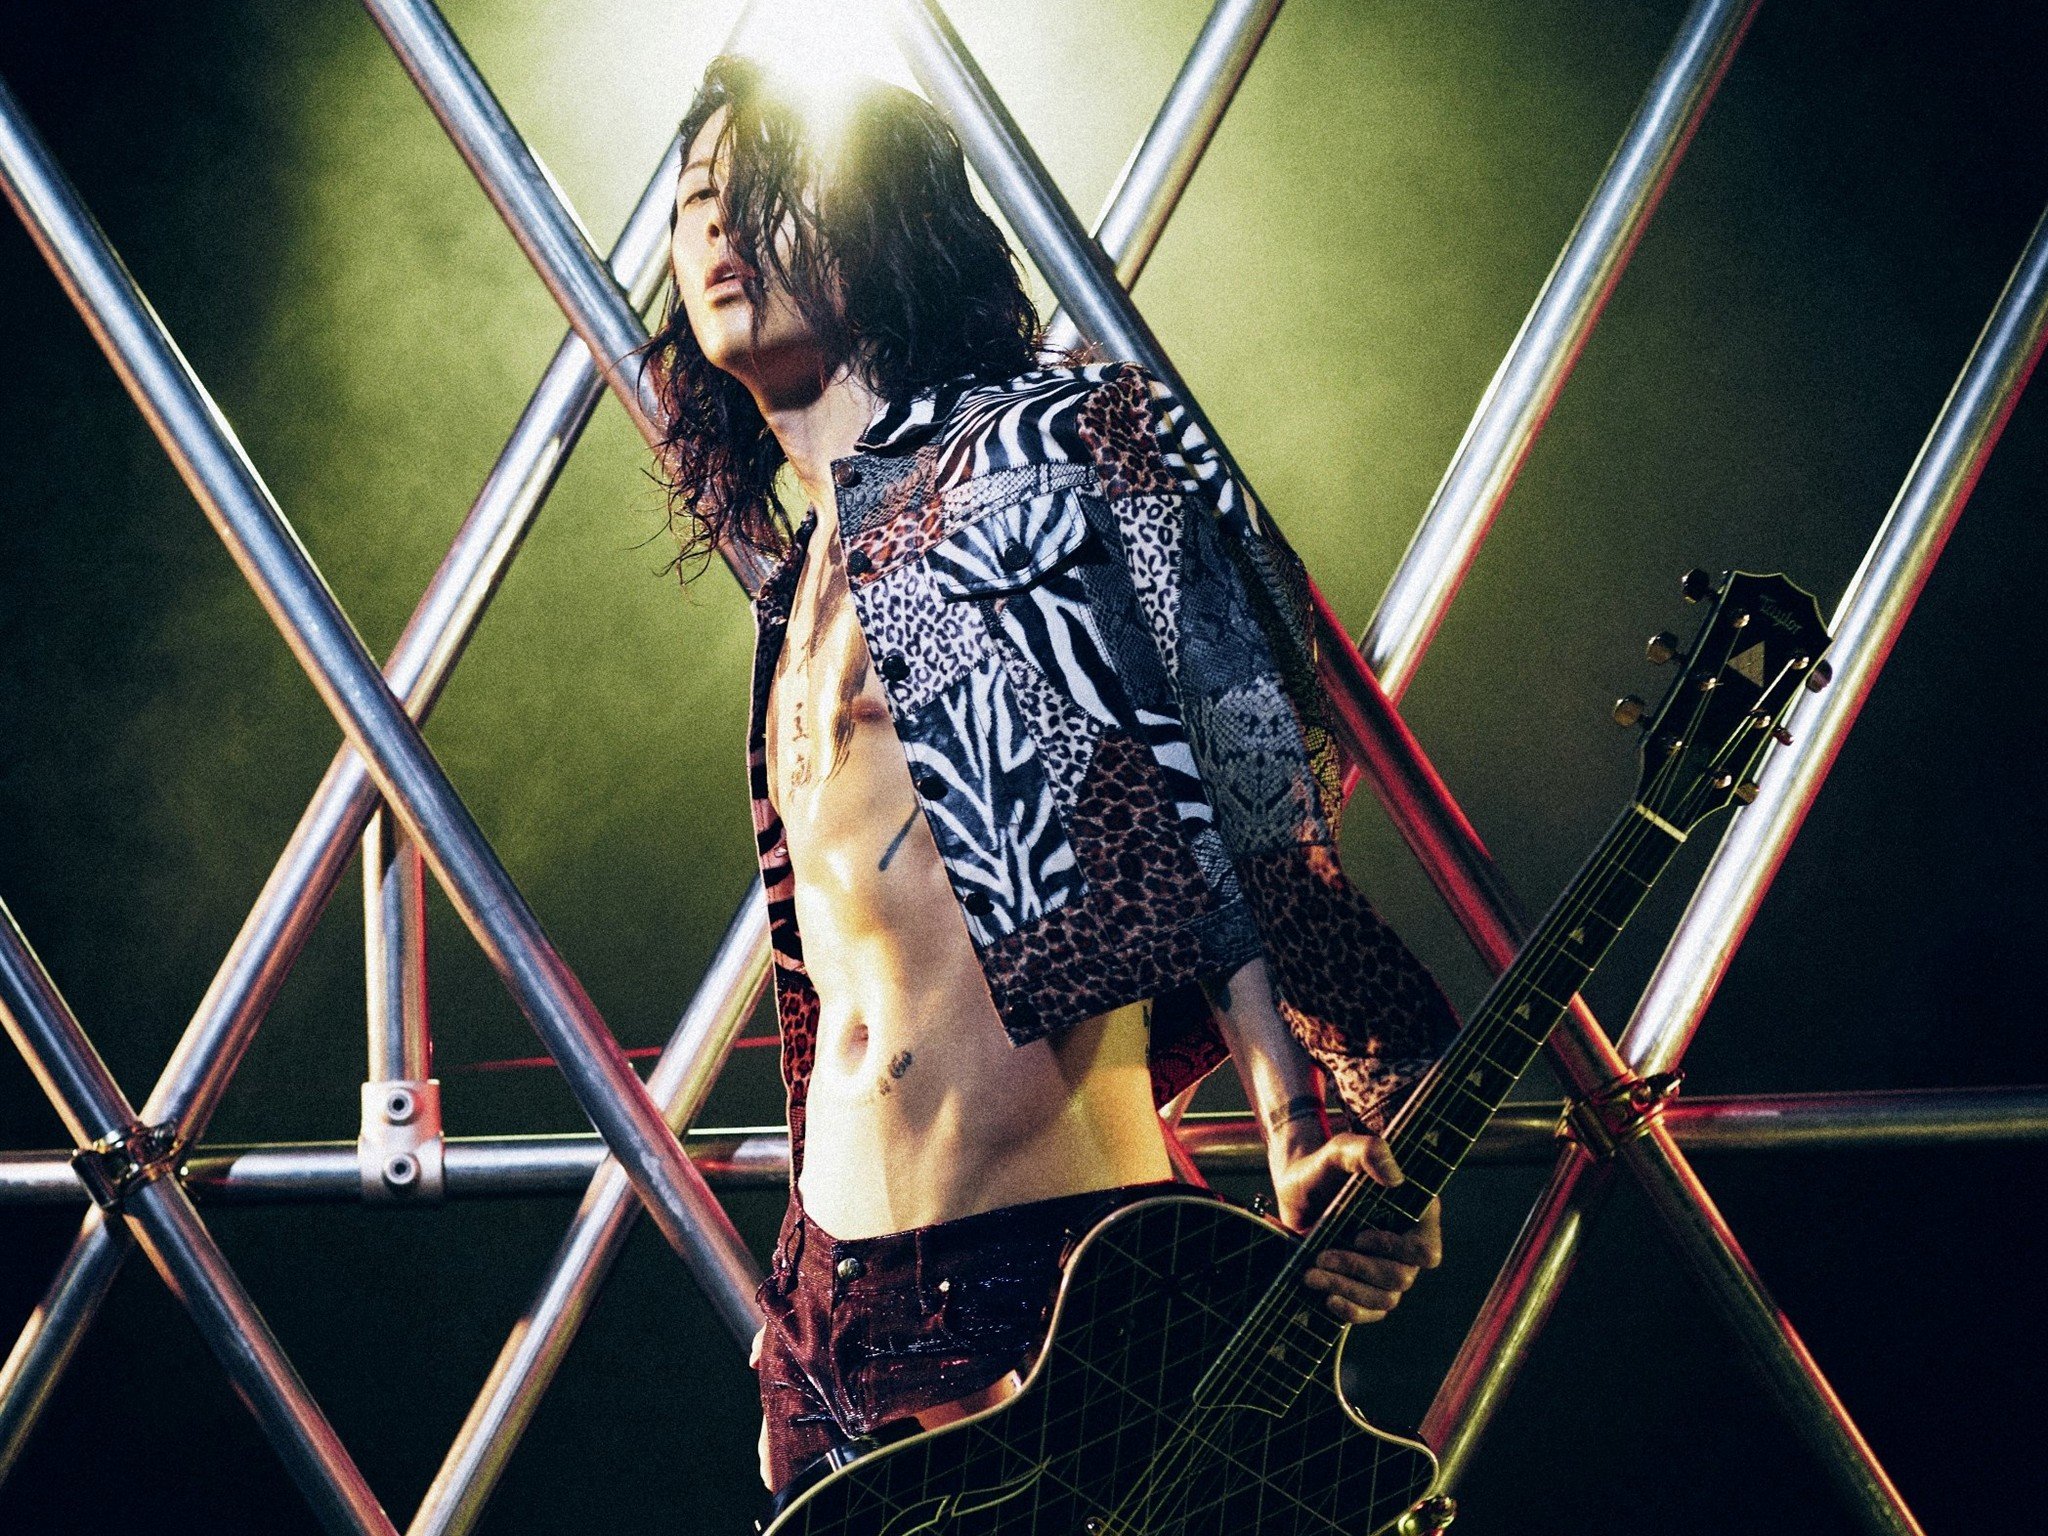 miyavi, Guitar, Rock, Pop, Hip, Hop, Japanese, Singer, Jrock, Visual Wallpaper